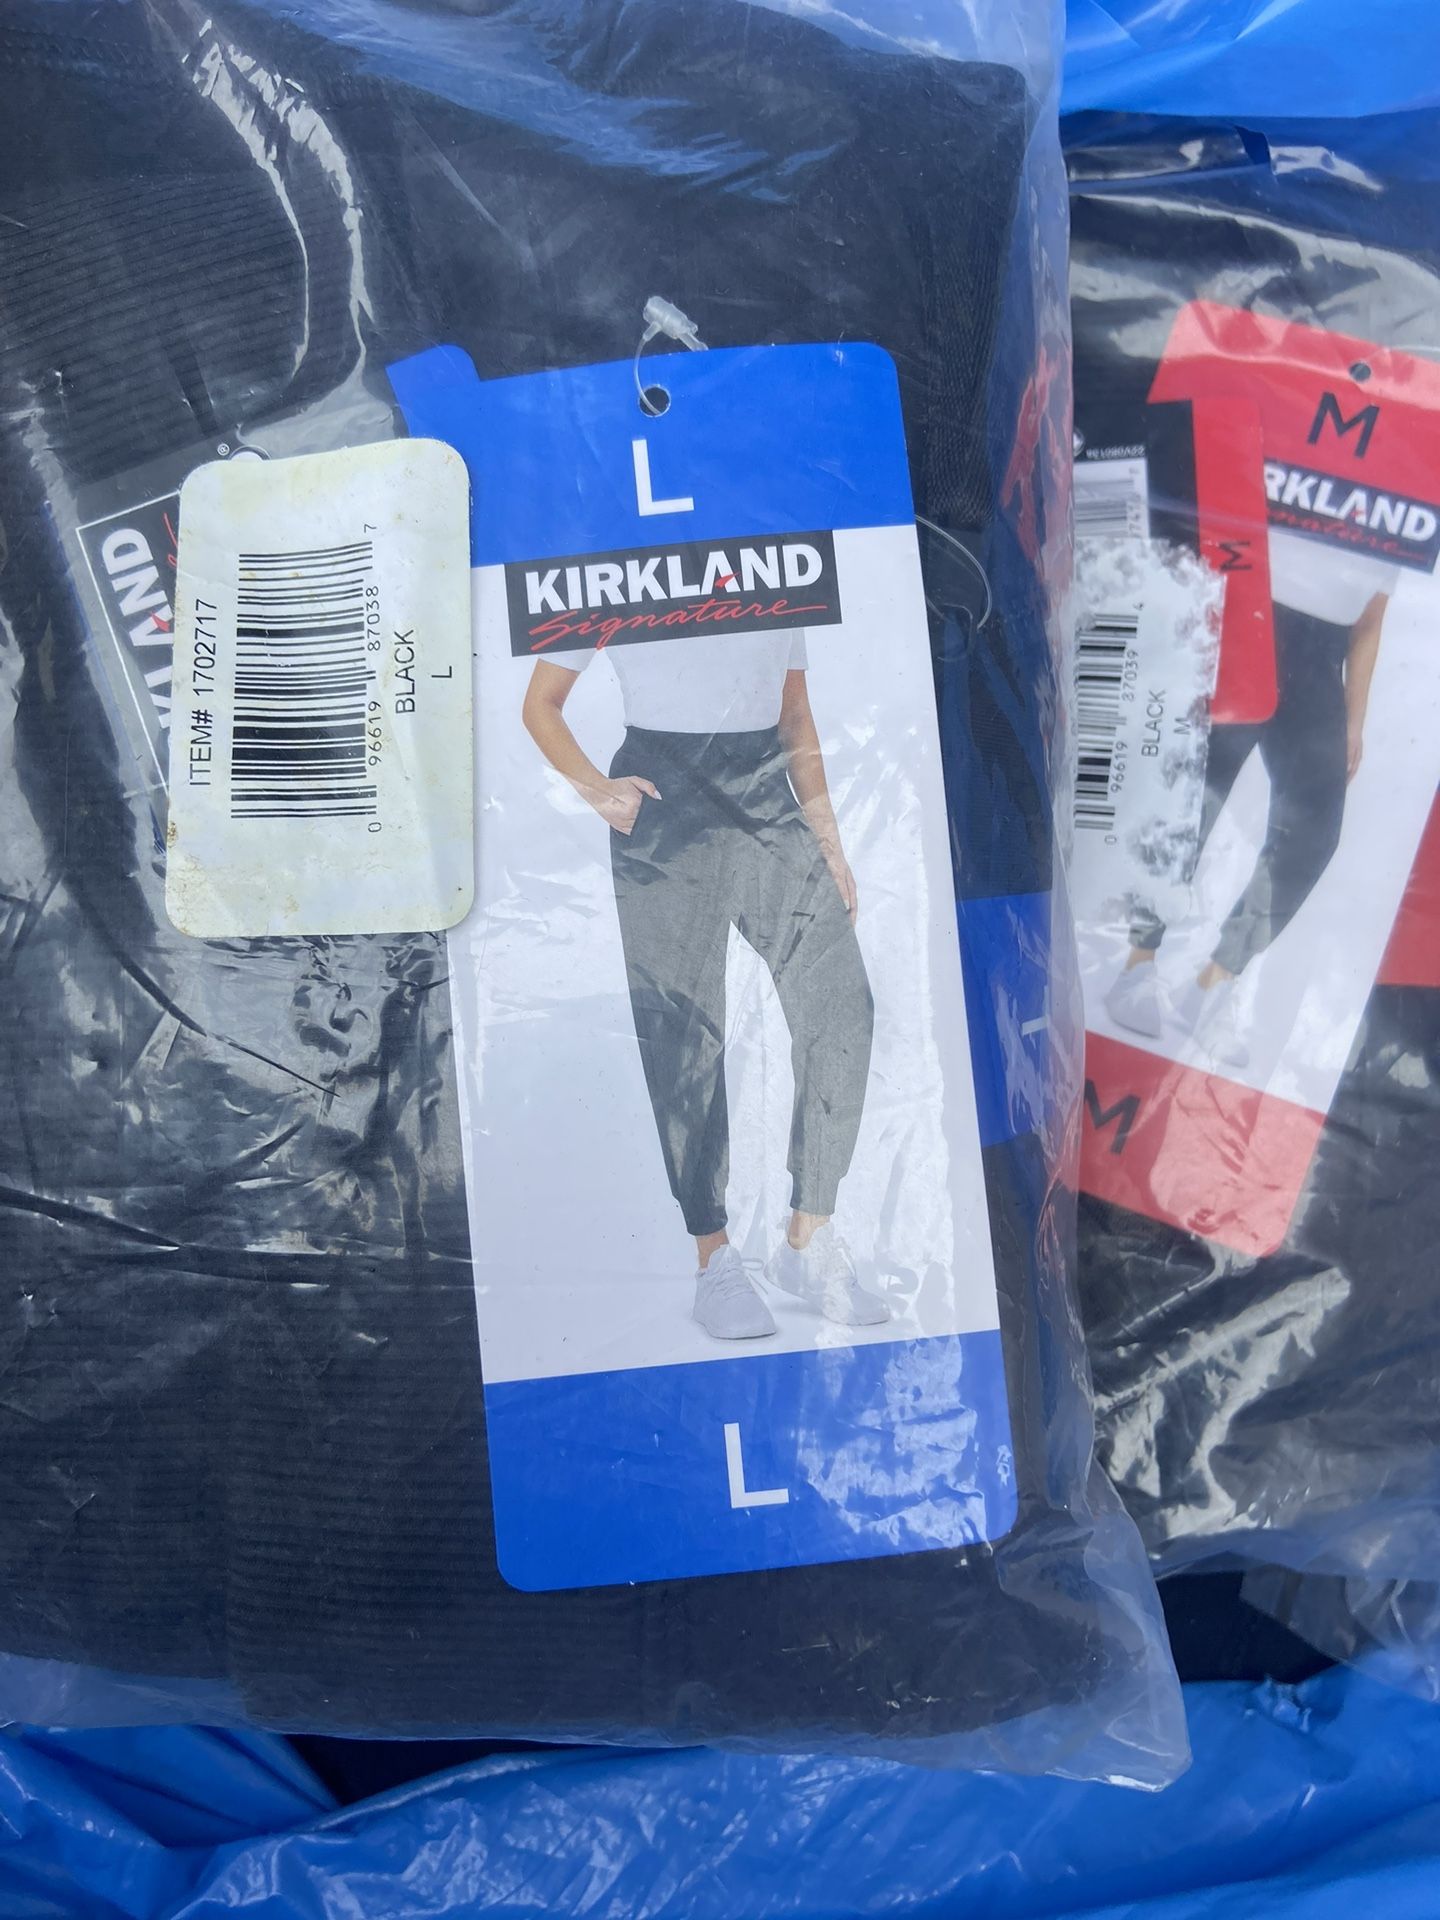 2 For $15 Joggers Sweats Kirkland Costco brand 